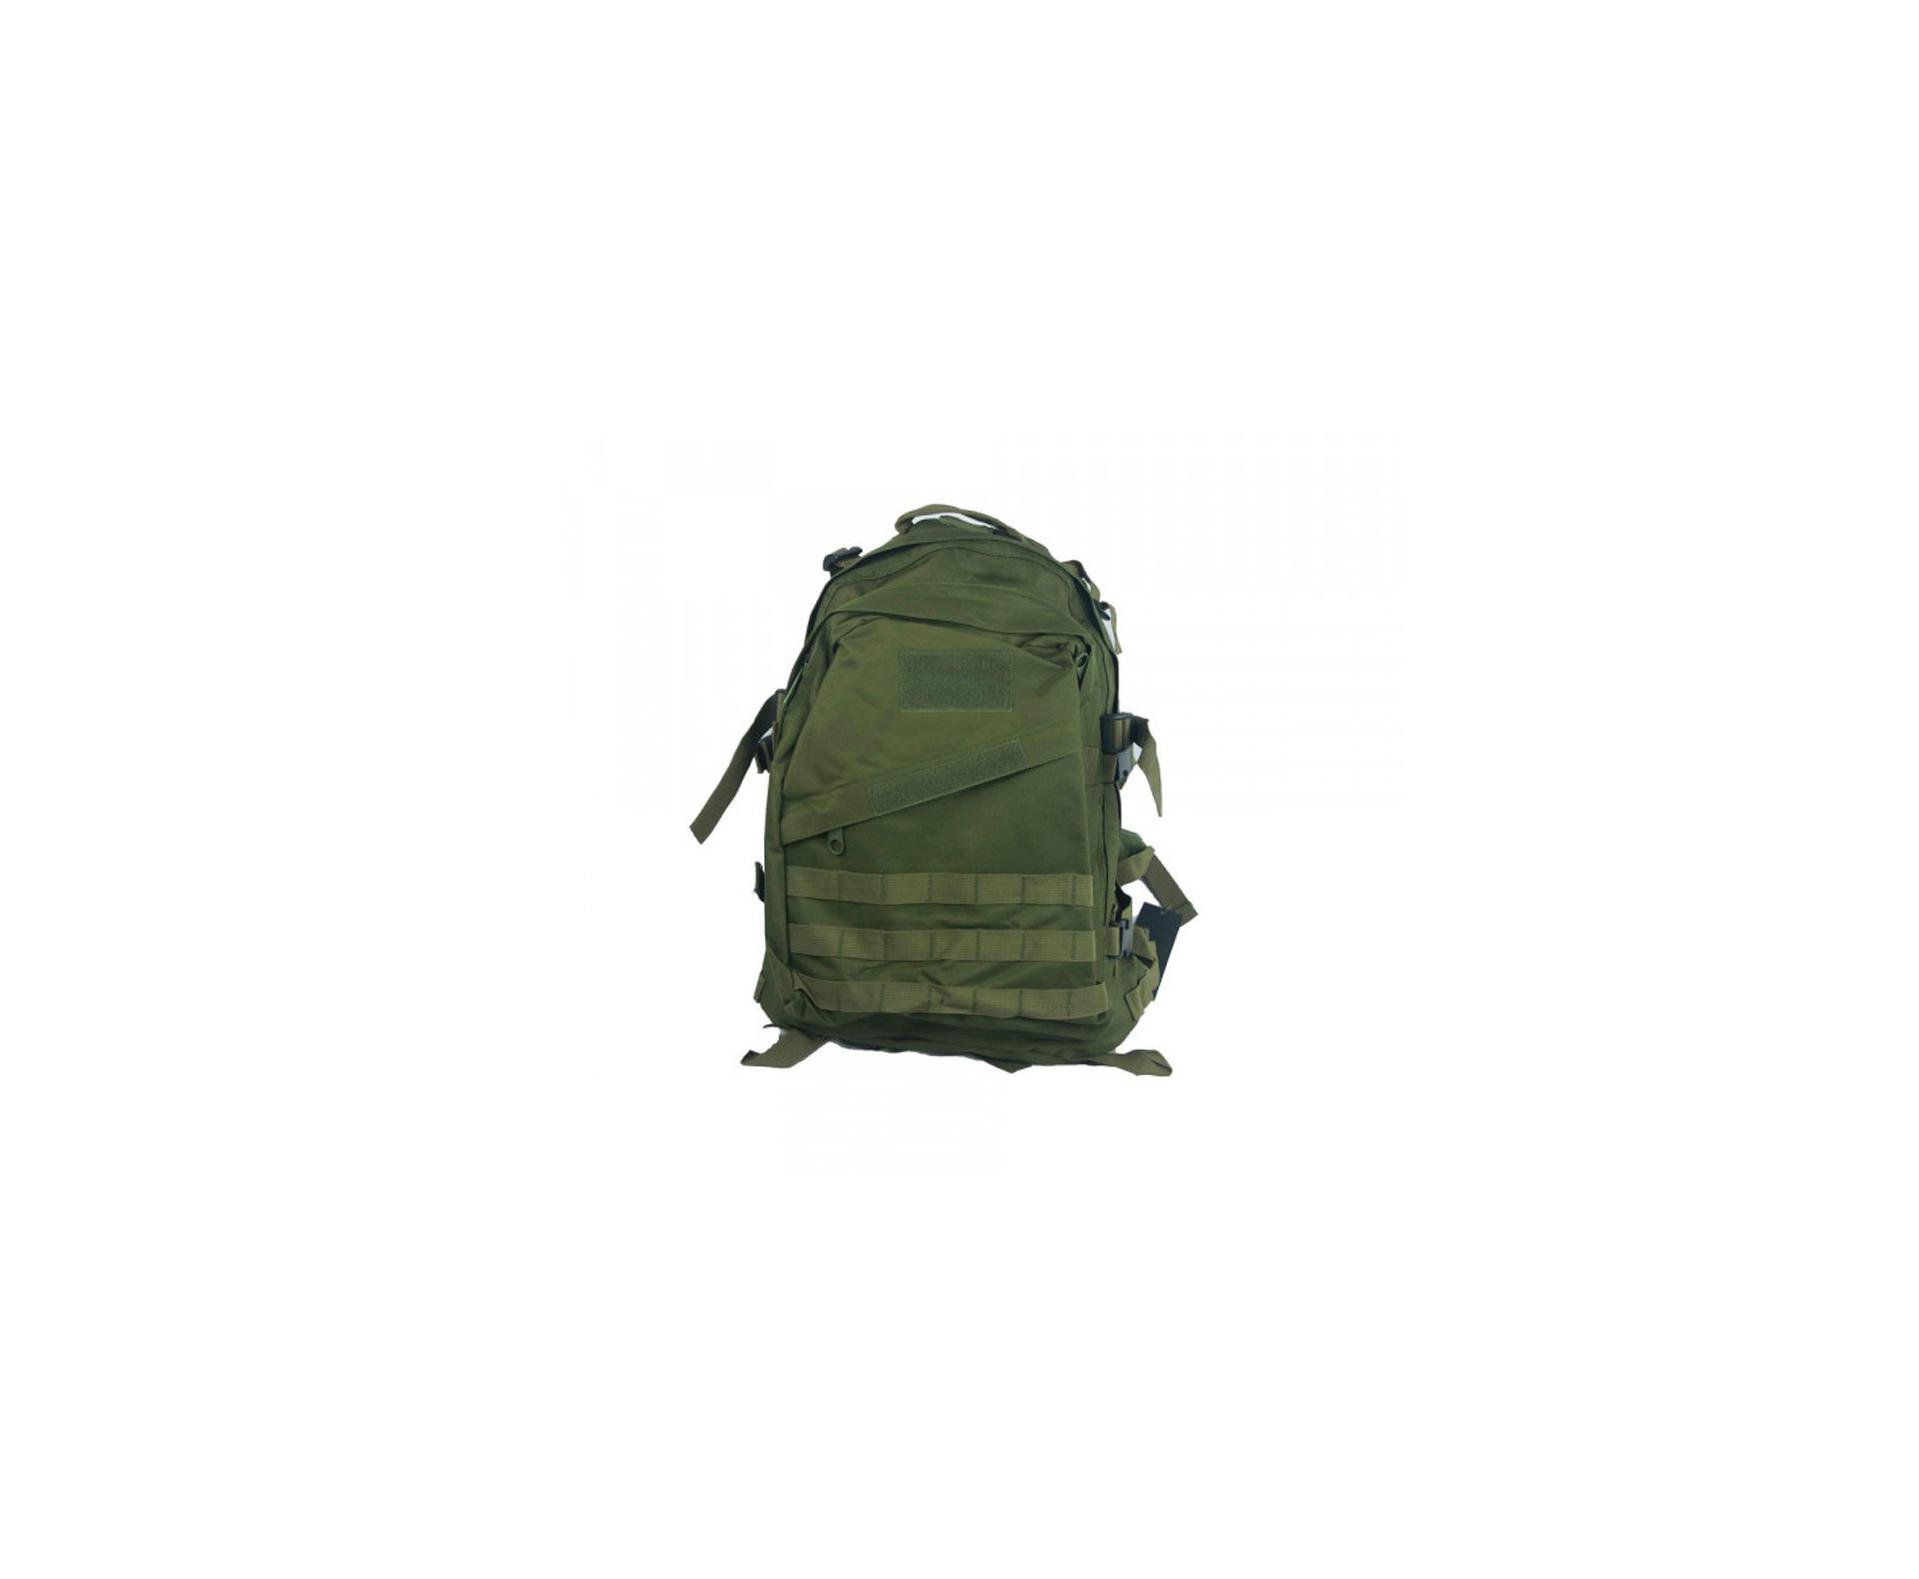 Mochila Tatica Army 3d Assault Pack Verde Bs-028od - Evo Tactical